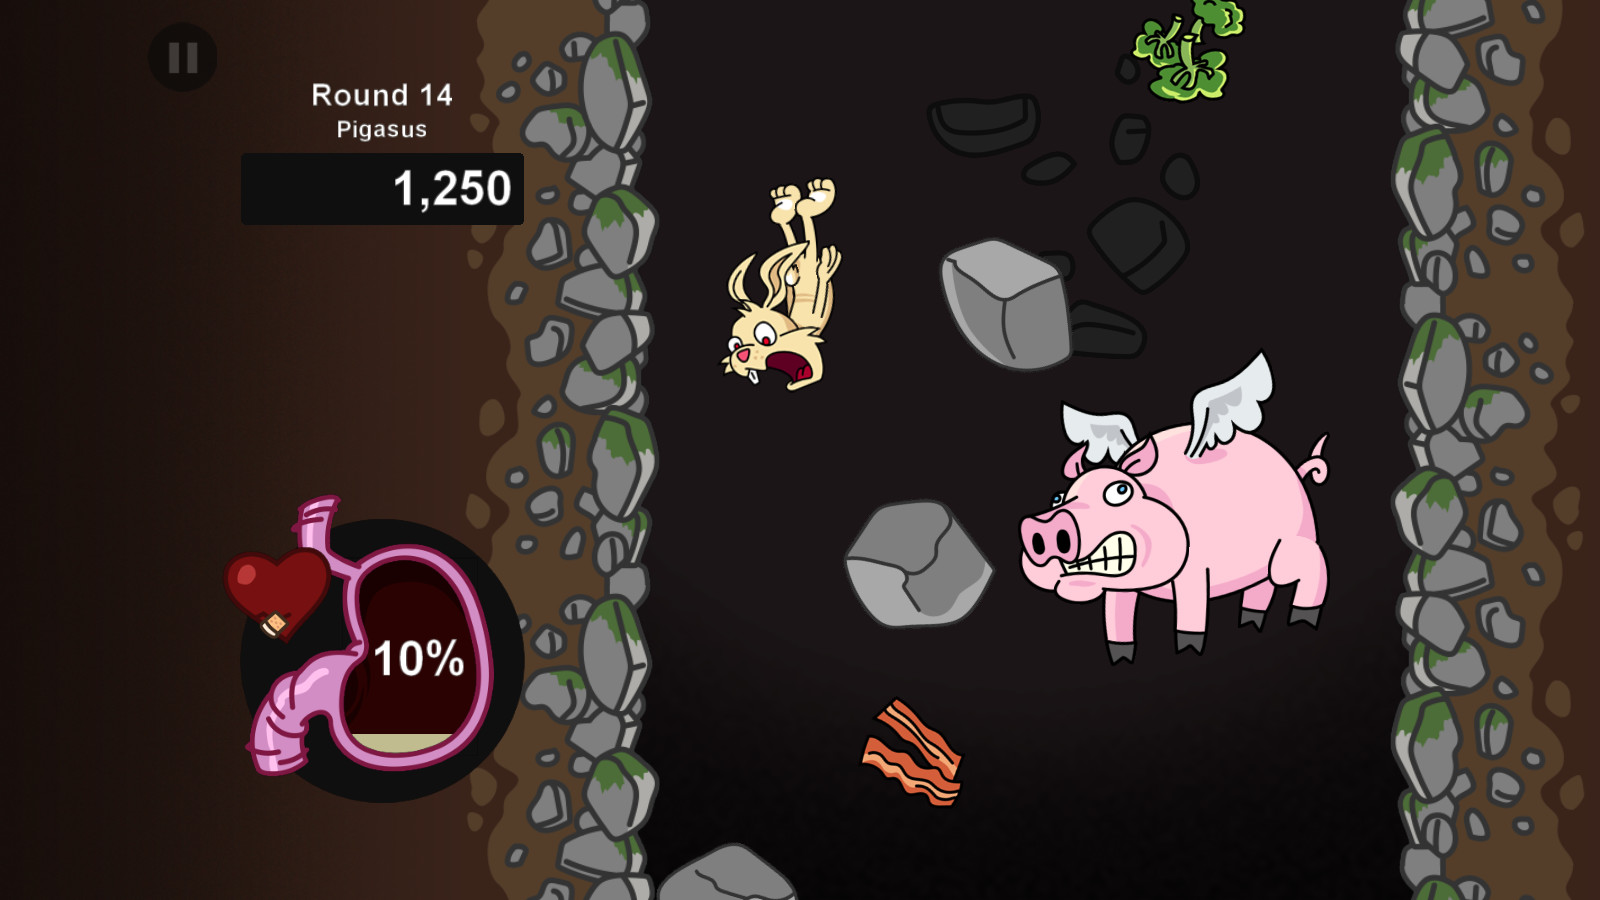 Fatty Rabbit Hole screenshot